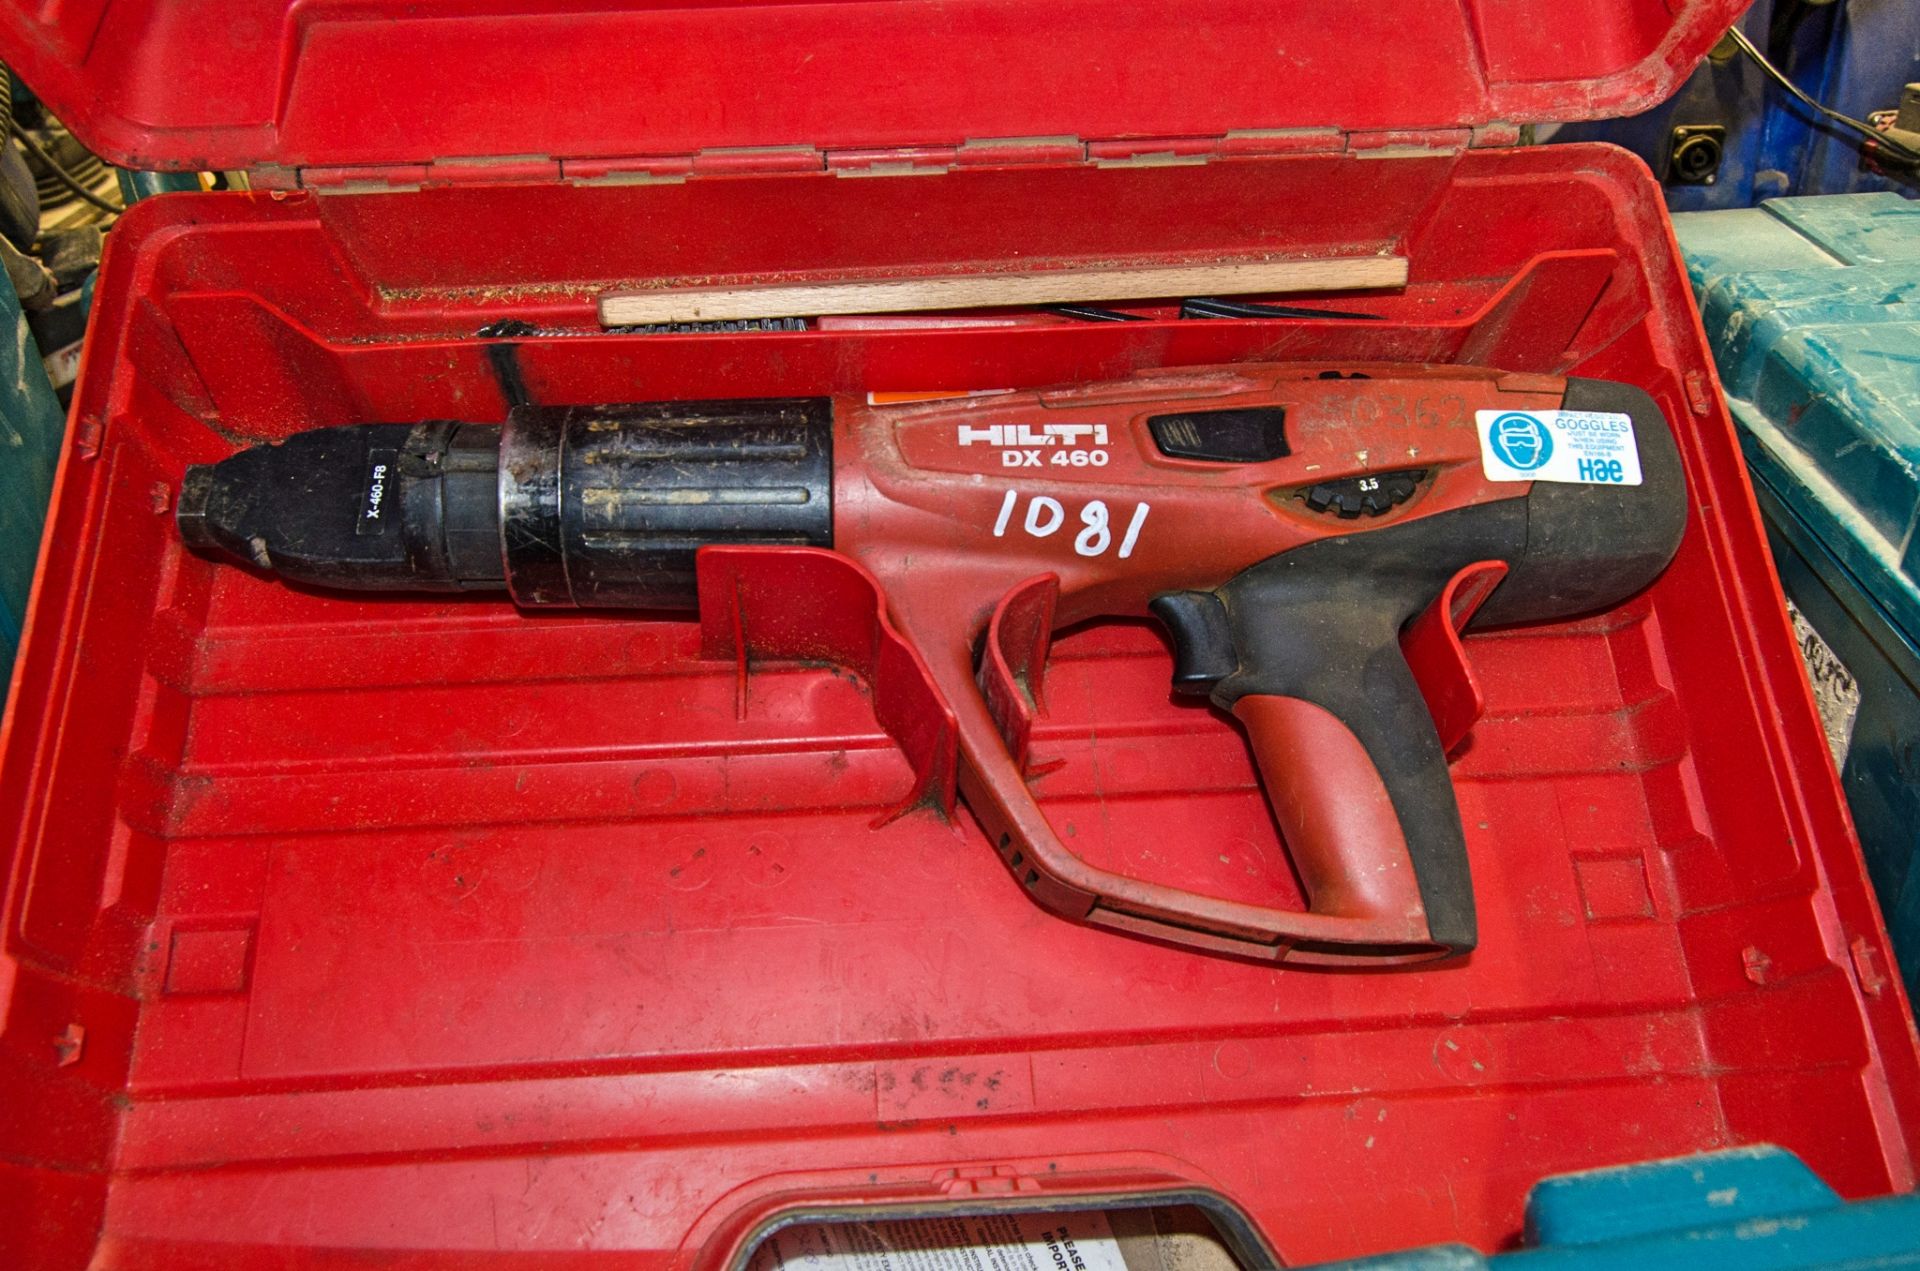 Hilti DX460 nail gun c/w carry case 50362